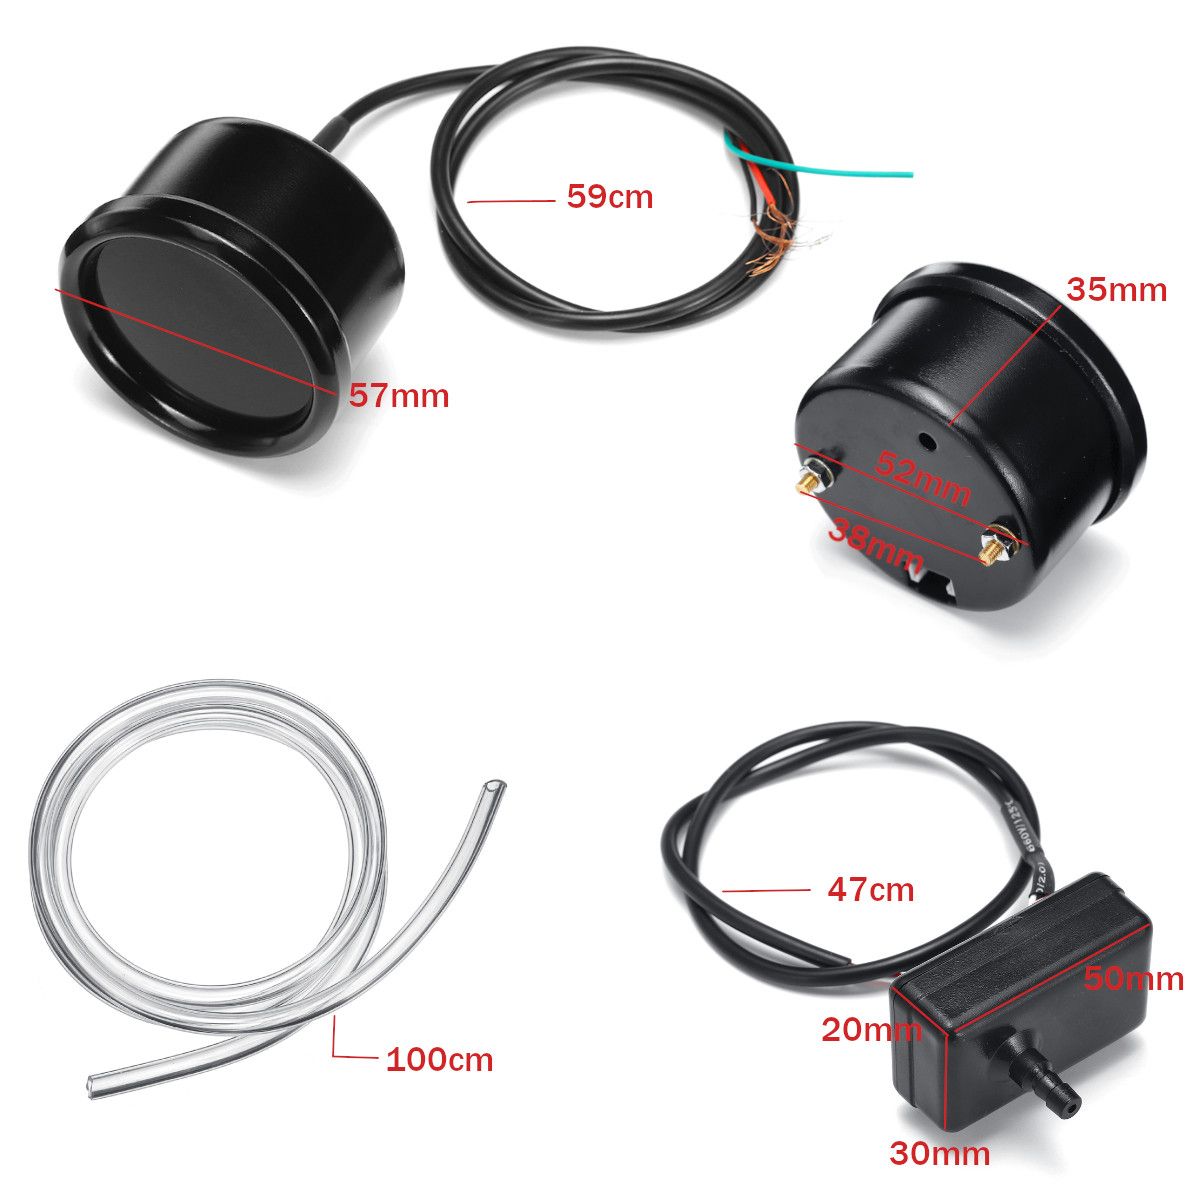 2-Inch-52mm-Turbo-Boost-Pressure-Gauge-Digital-LED-Display-Black-Face-Car-Meter-With-Sensor-1431342